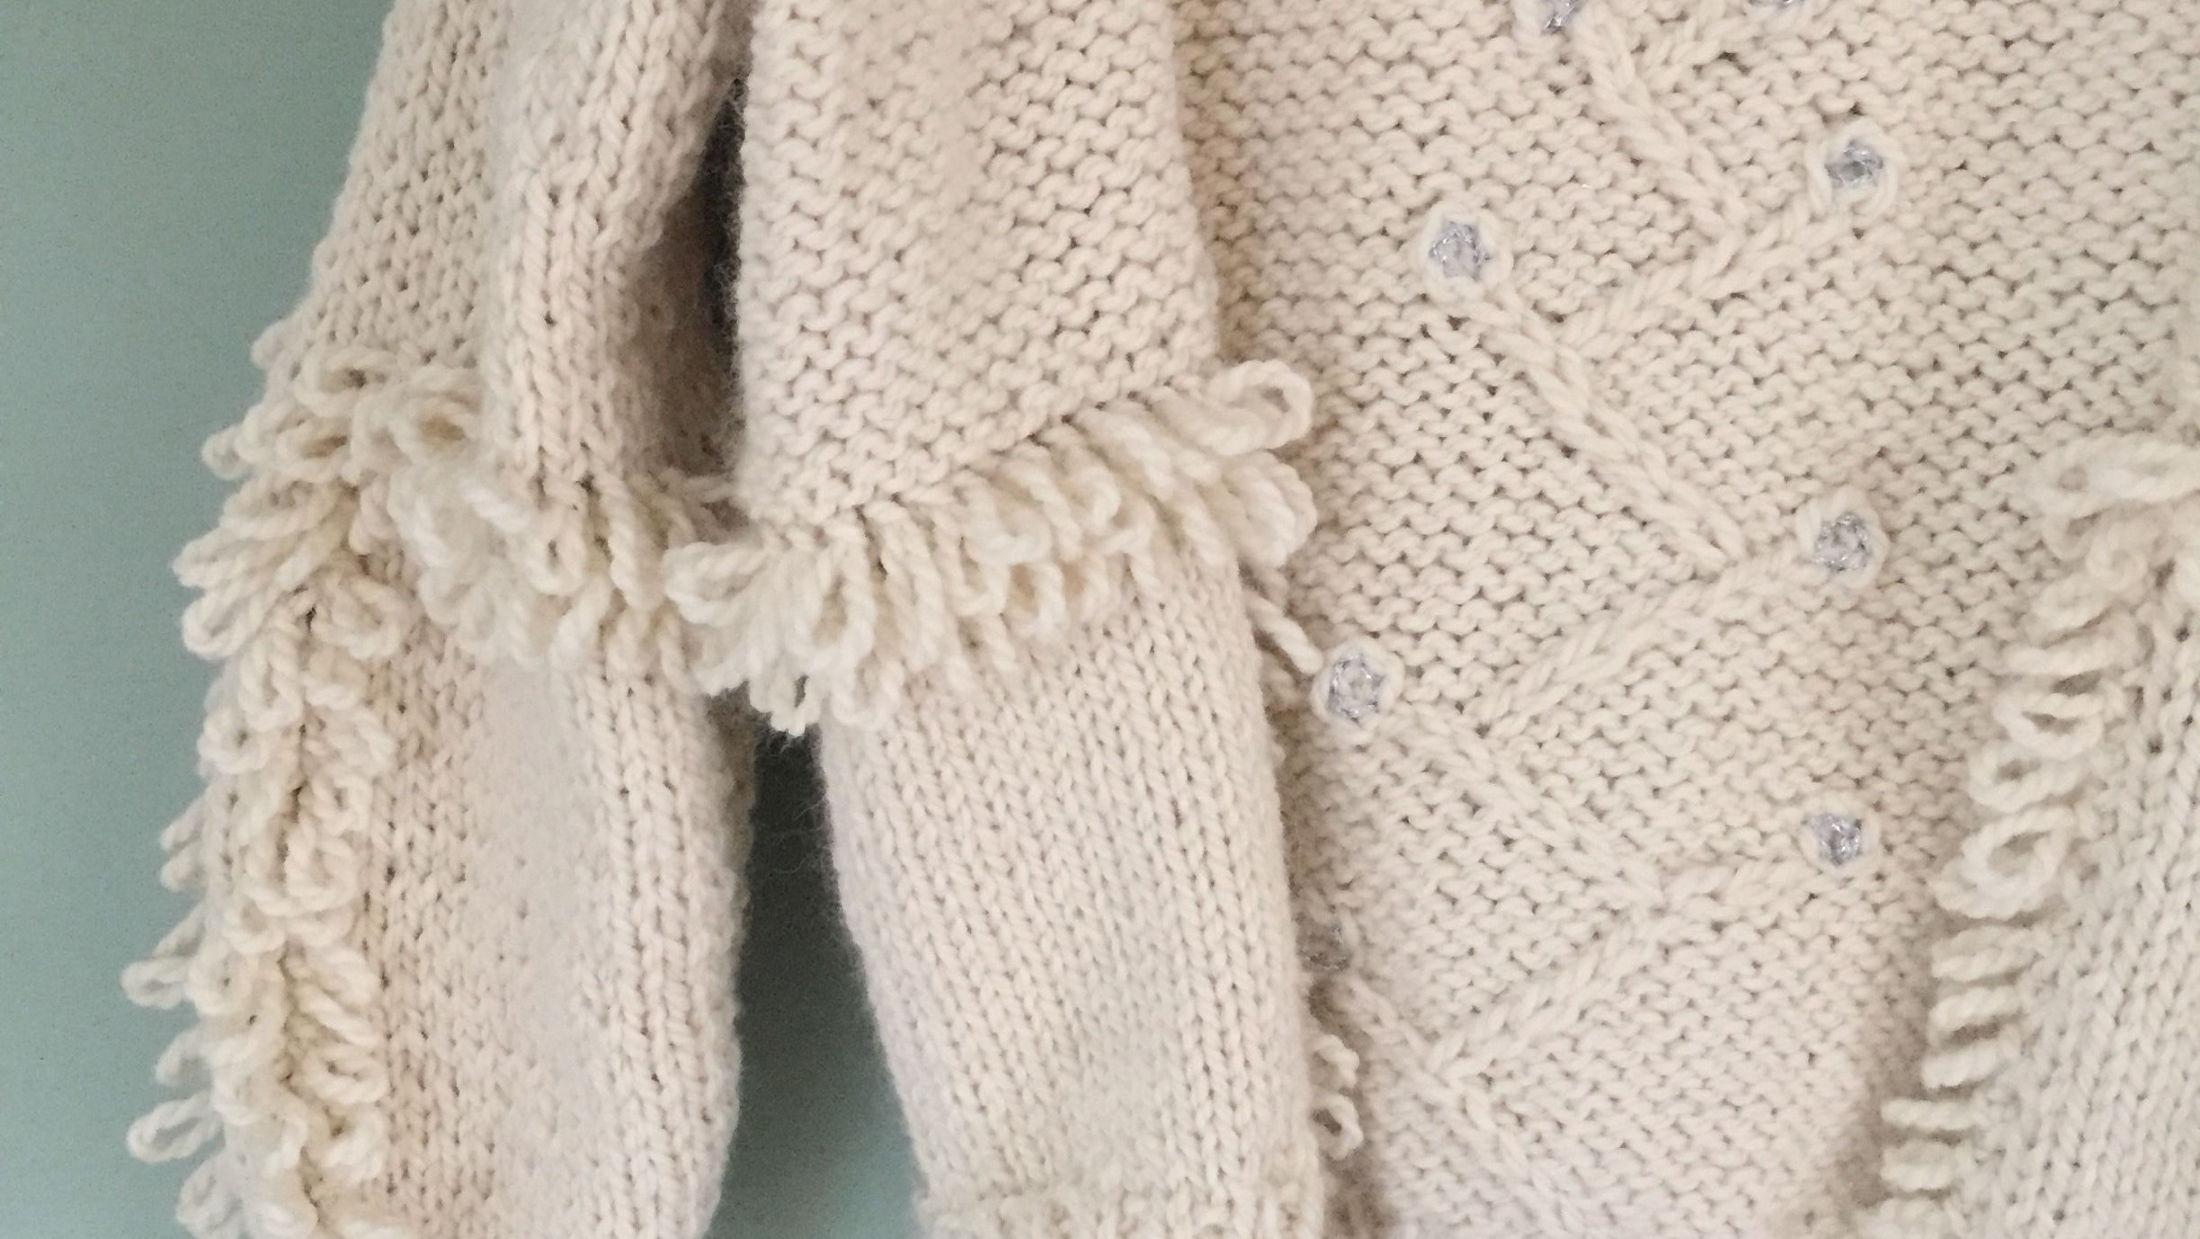 DETALJER: Med morsomme detaljer får genseren et unikt utseende. Foto: Mari Stølan.